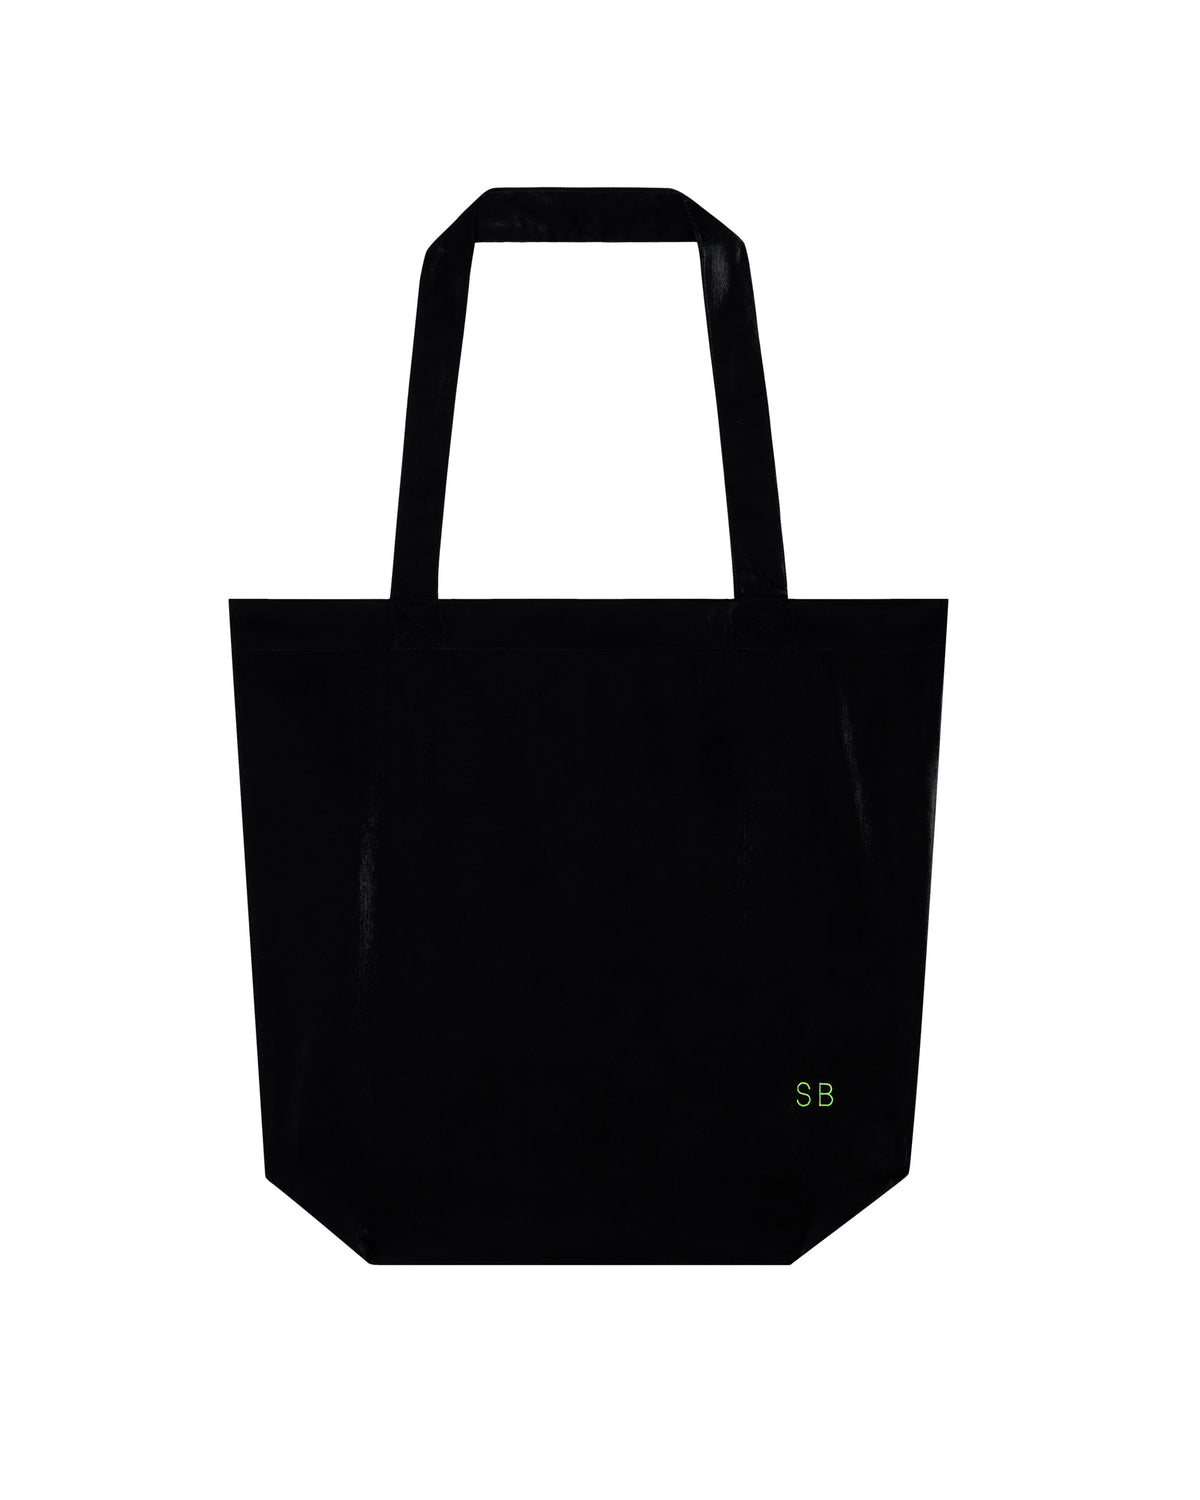 SB Tote Bag - Black